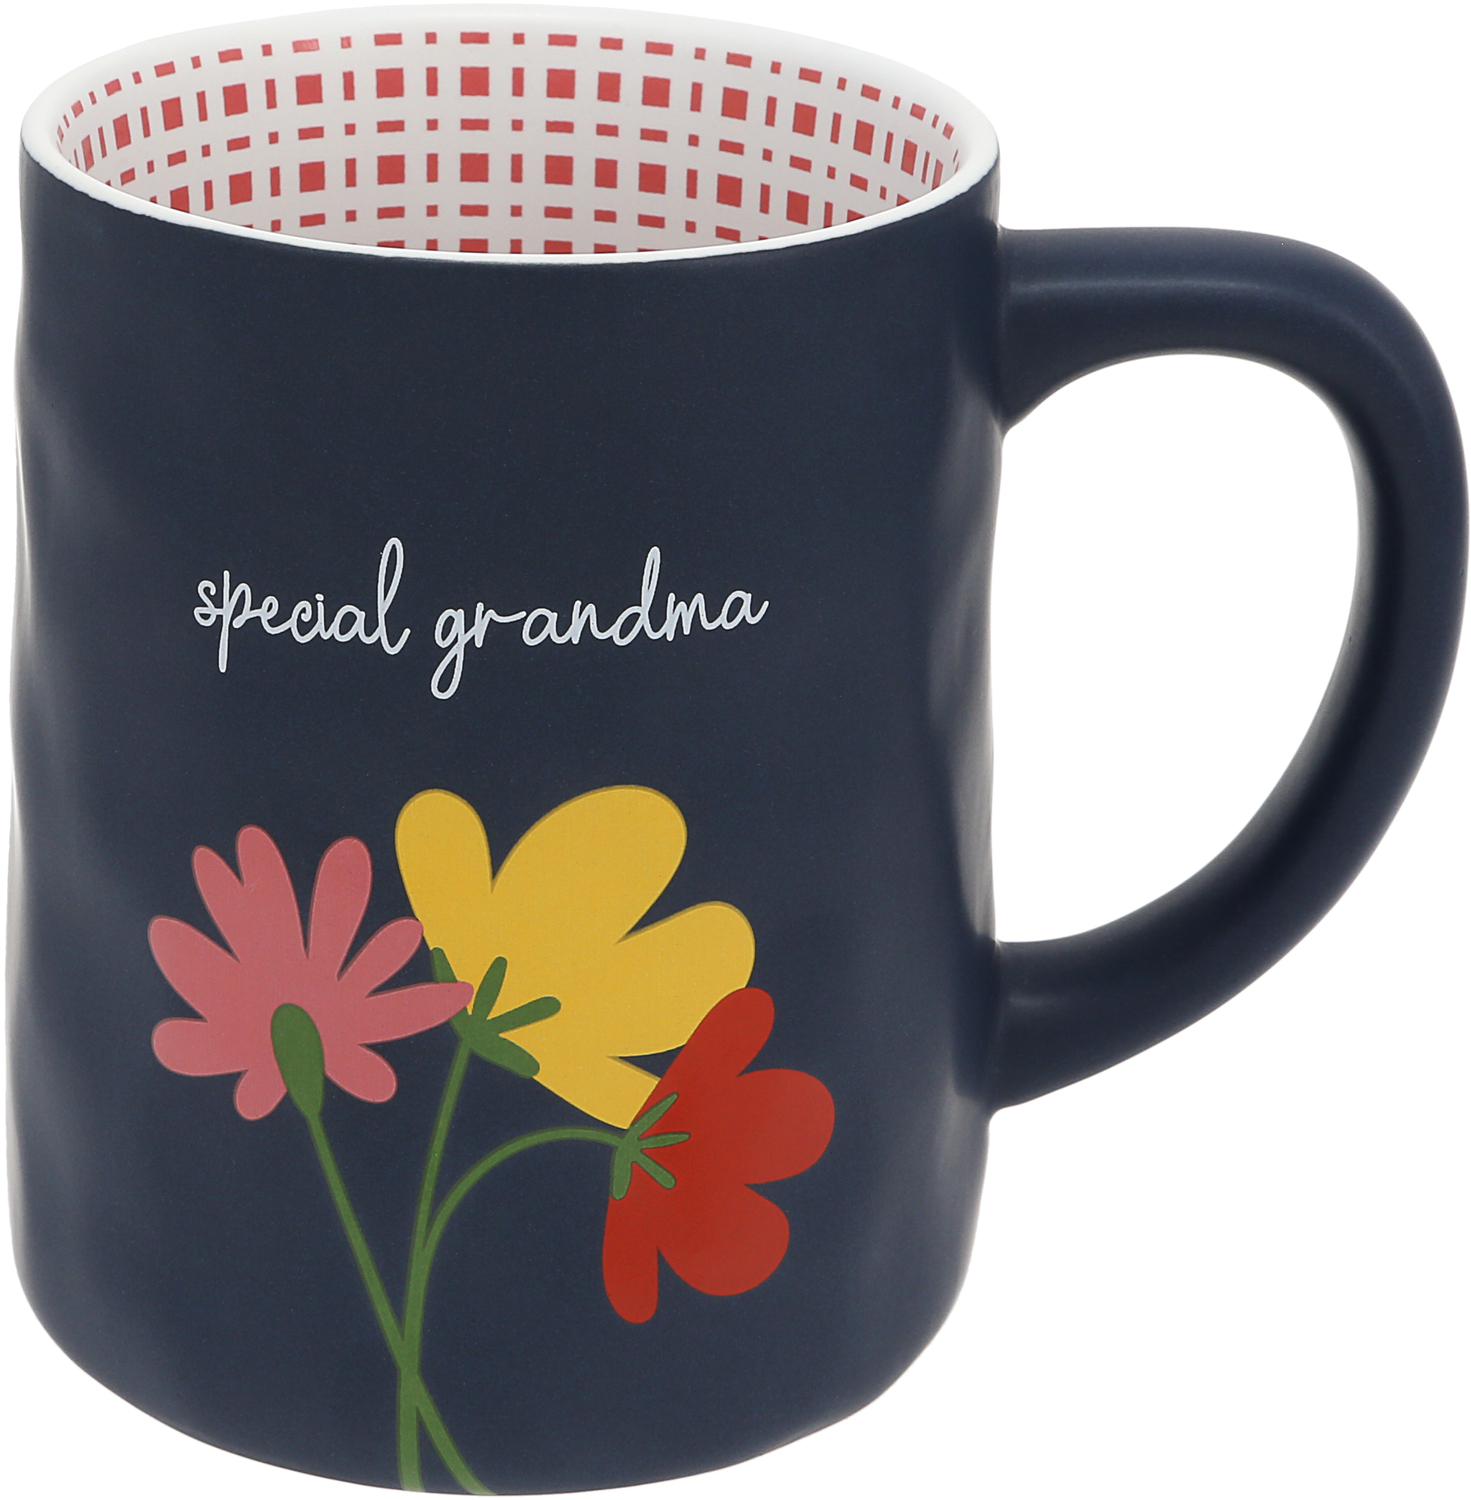 Special Gandma by Grateful Garden - Special Gandma - 17 oz Mug